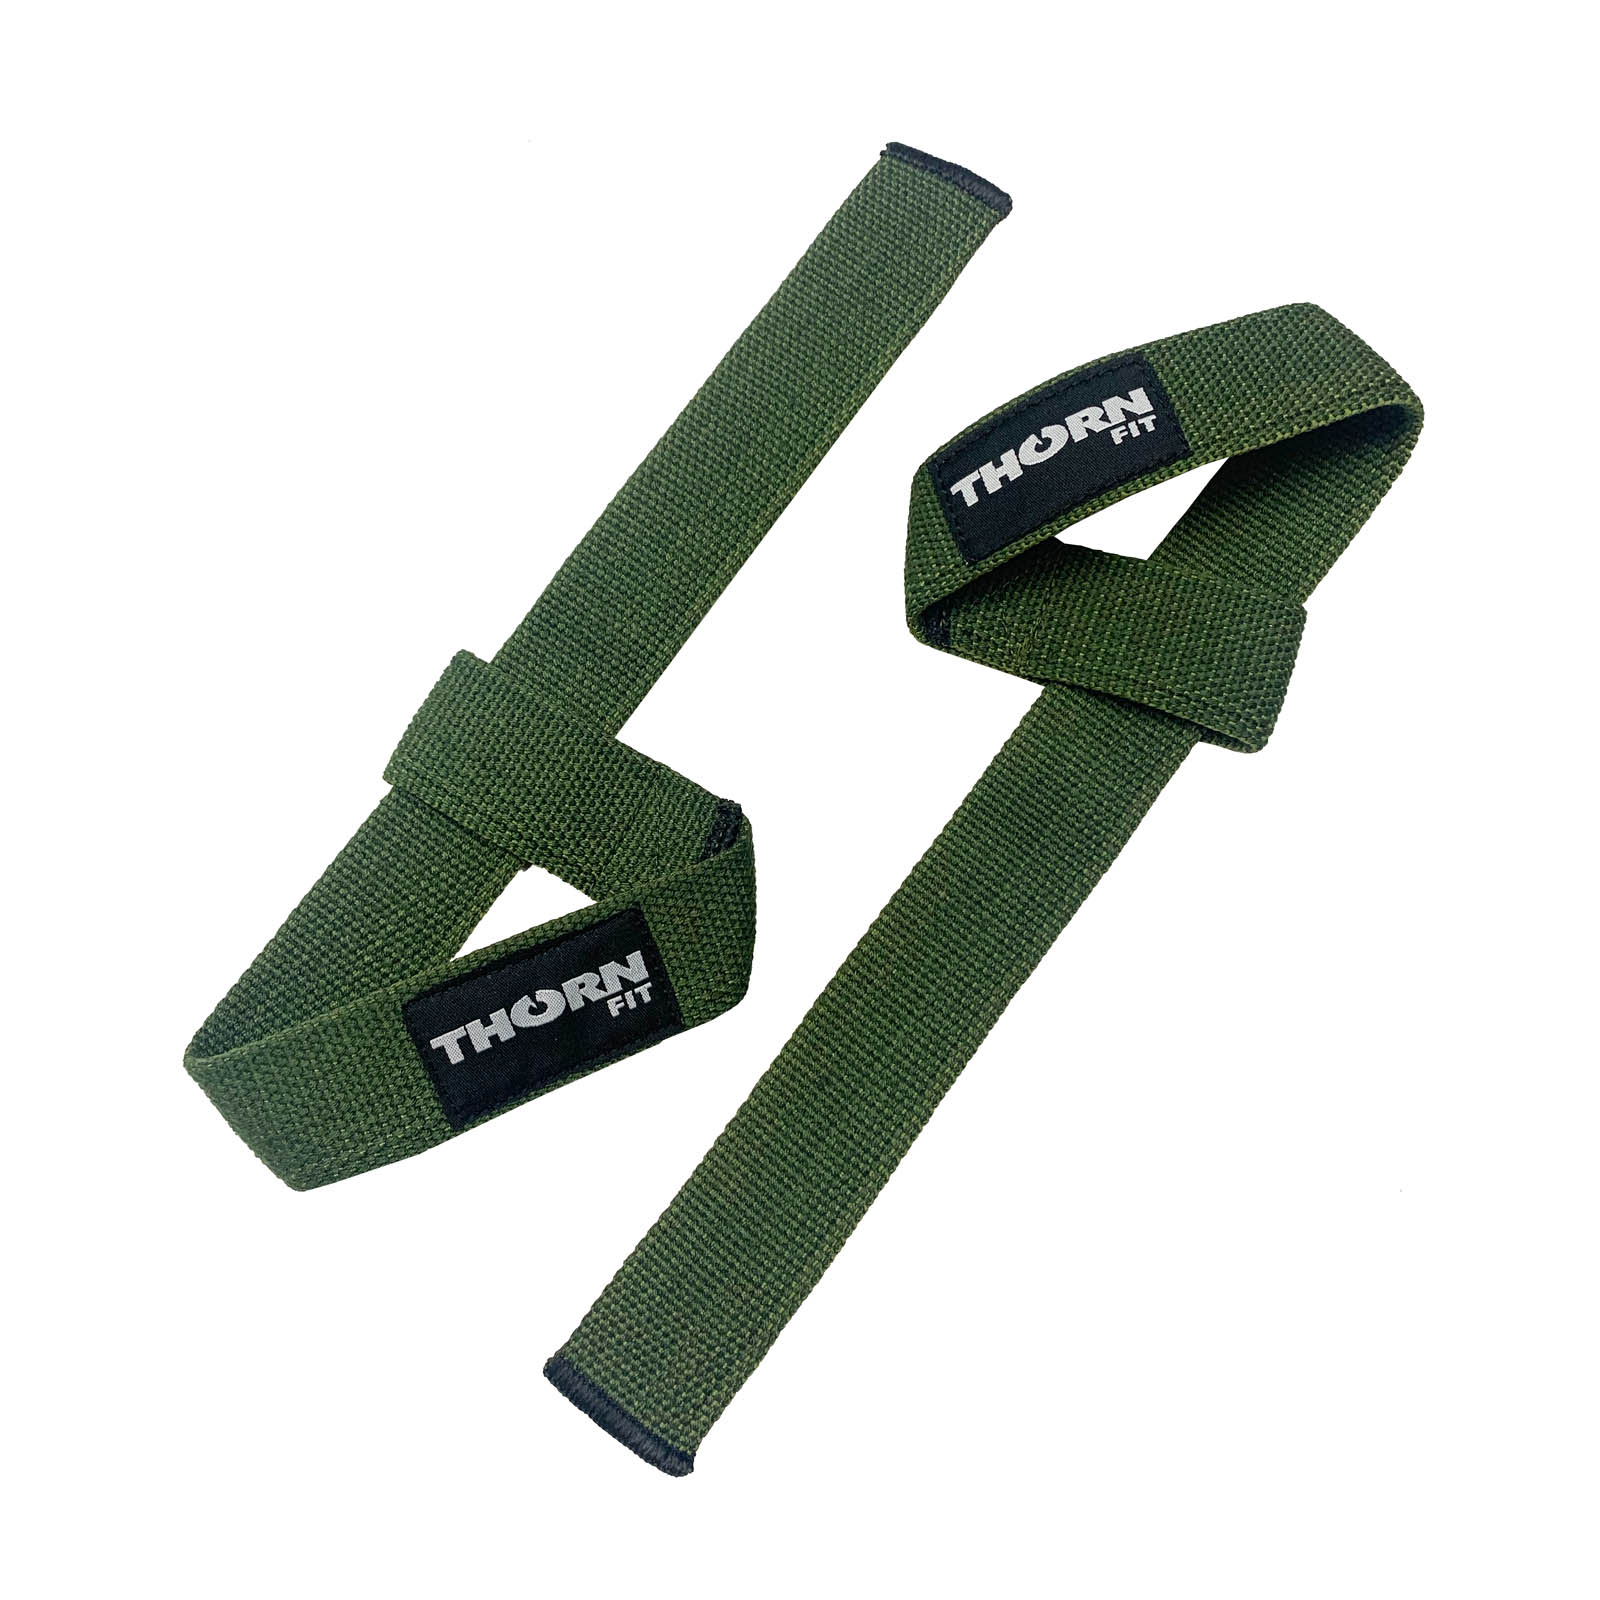 https://thornfit.pl/wp-content/uploads/2023/01/Paski-do-podnoszenia-ciezarow-THORN-FIT-Lifting-straps-cotton-army-green-1.jpg